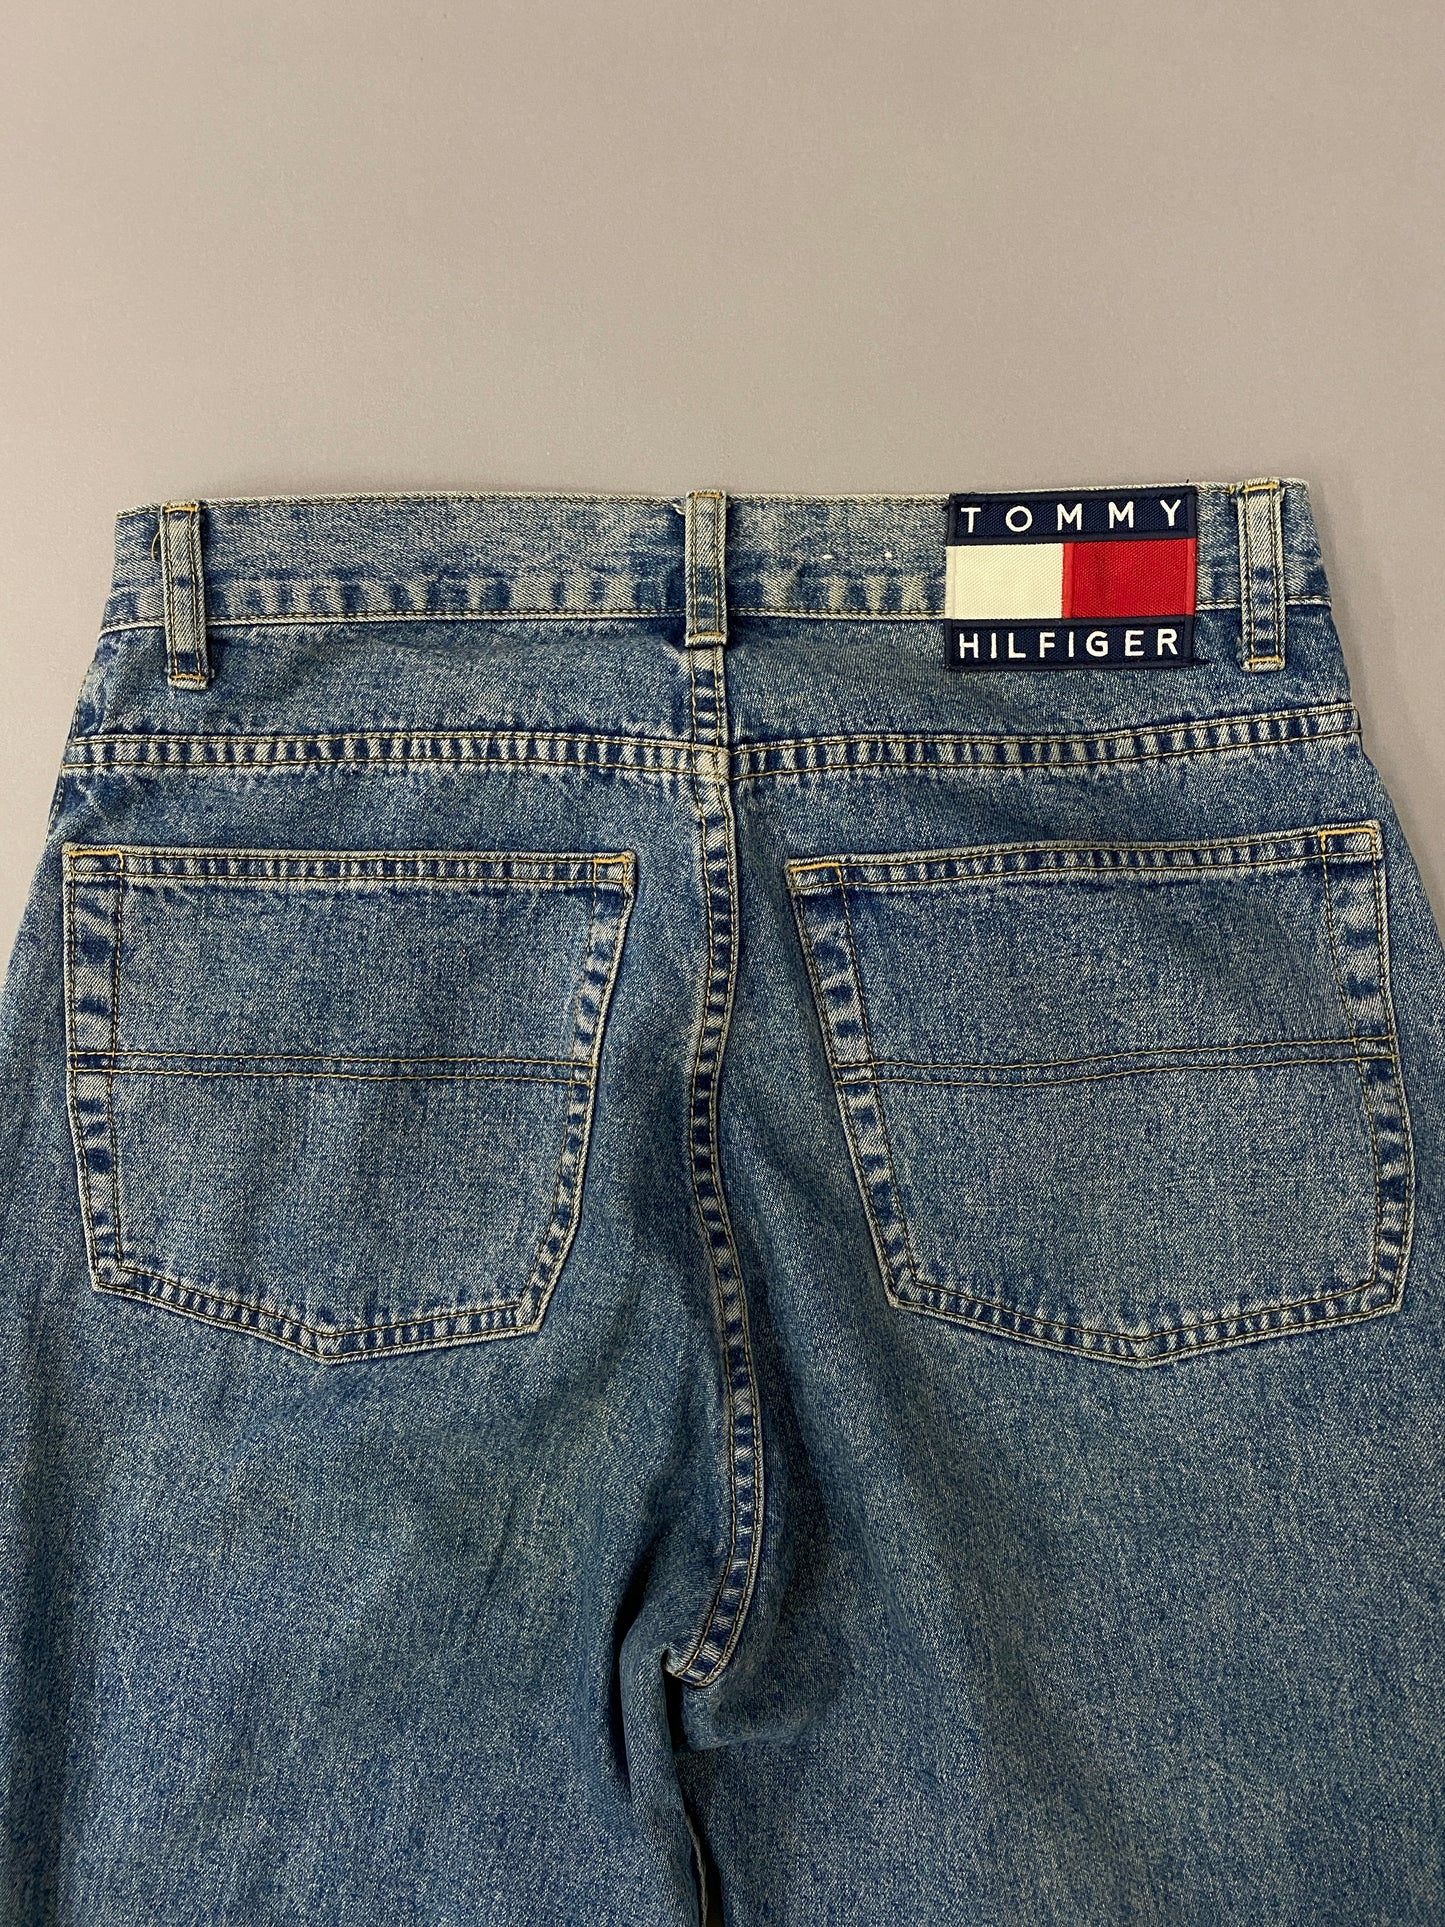 Vintage Tommy Jeans - 32 x 32